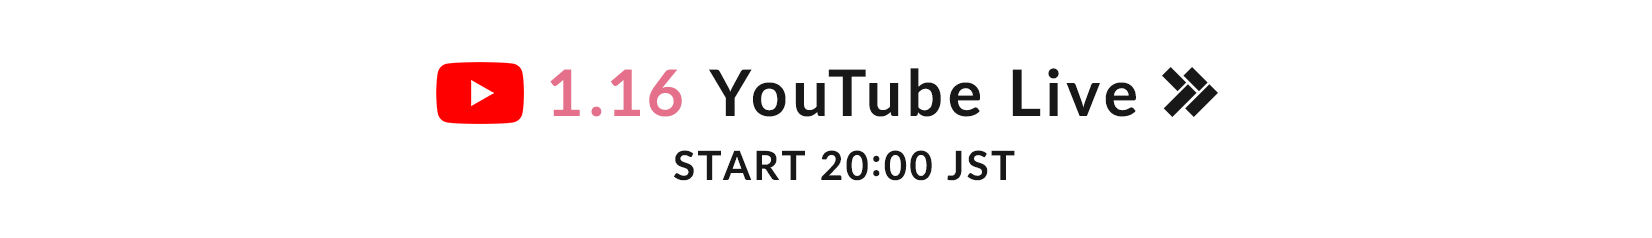 1.16 YouTube Live START 20:00 JST